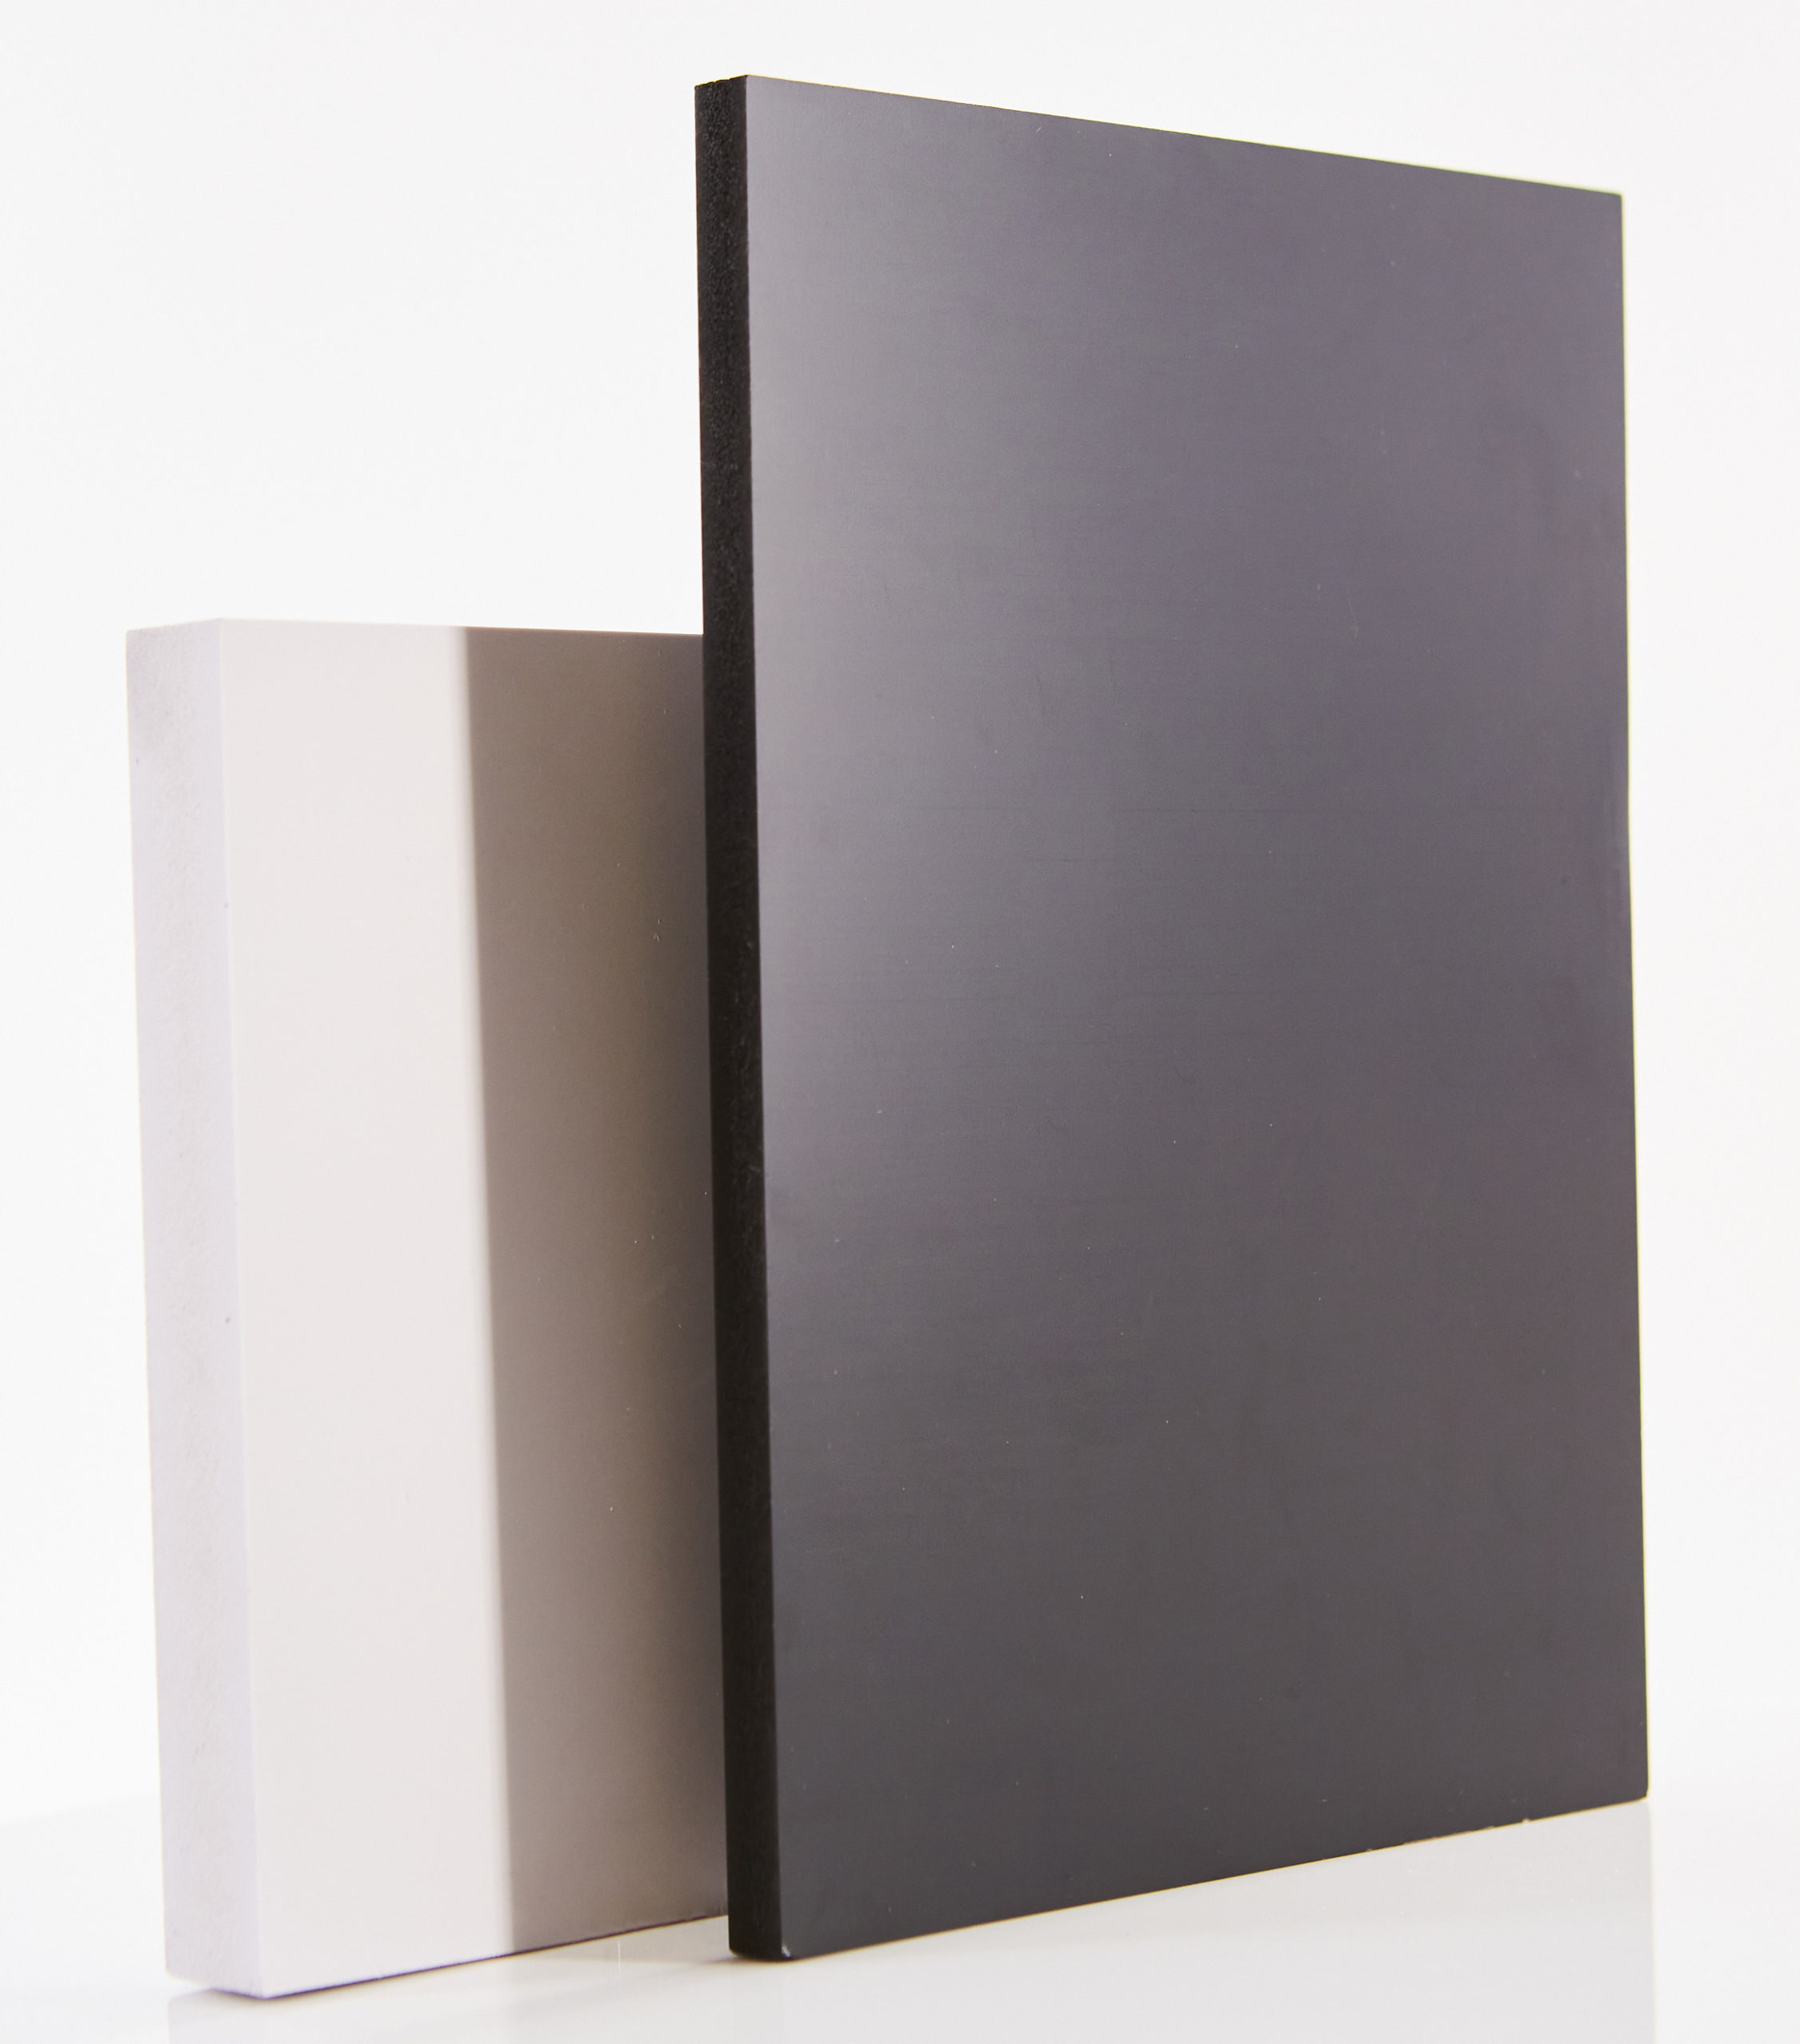 3 Pack A4 3 mm grey rigid PVC Foam sheet 297 mm x 210 mm Signs-models-etc 